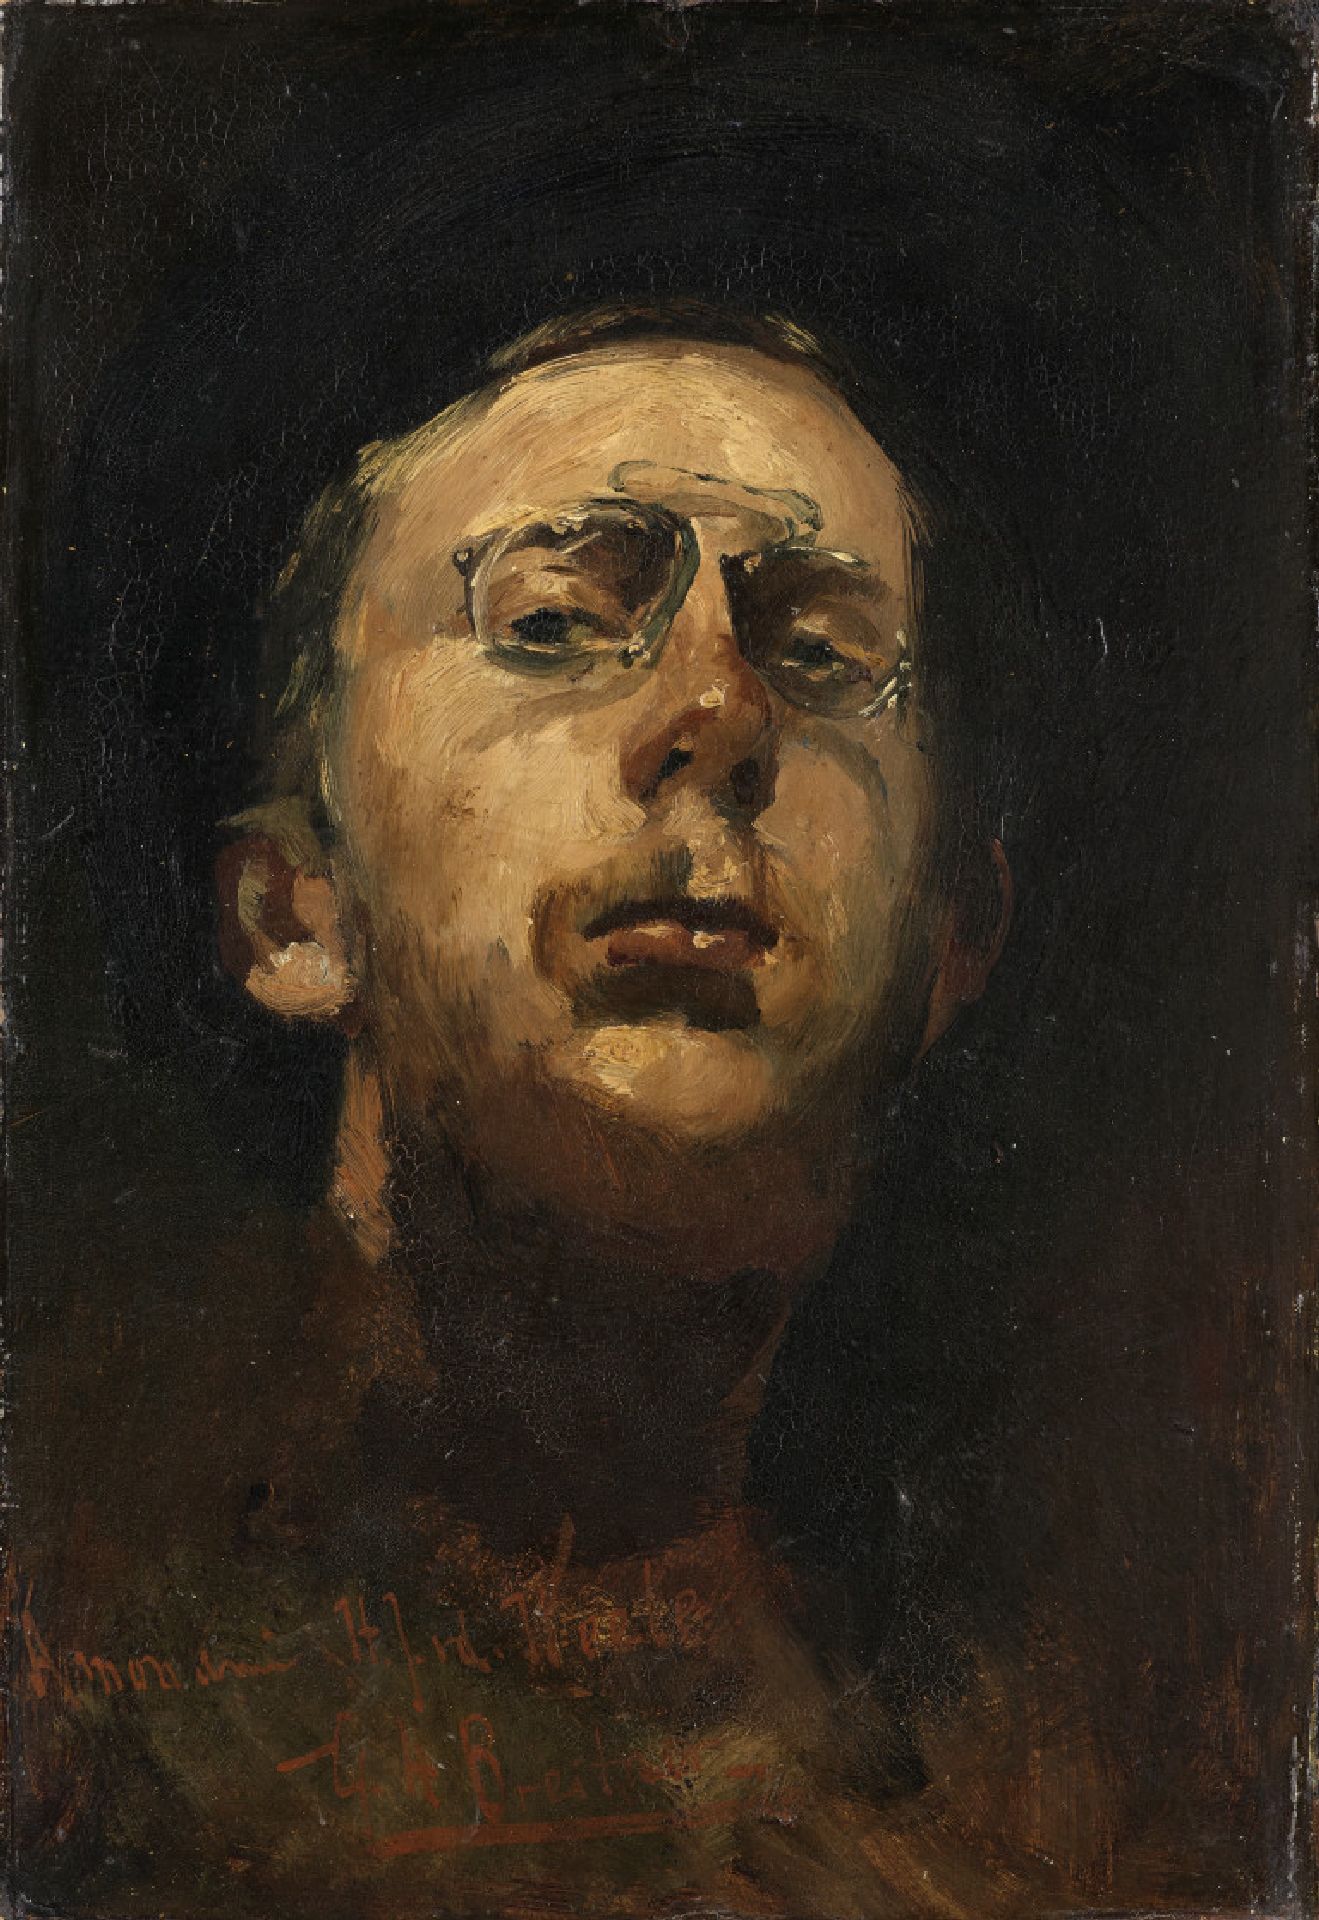 Portrait of artist, painter, watercolourist, draughtsman and printmaker George Hendrik Breitner